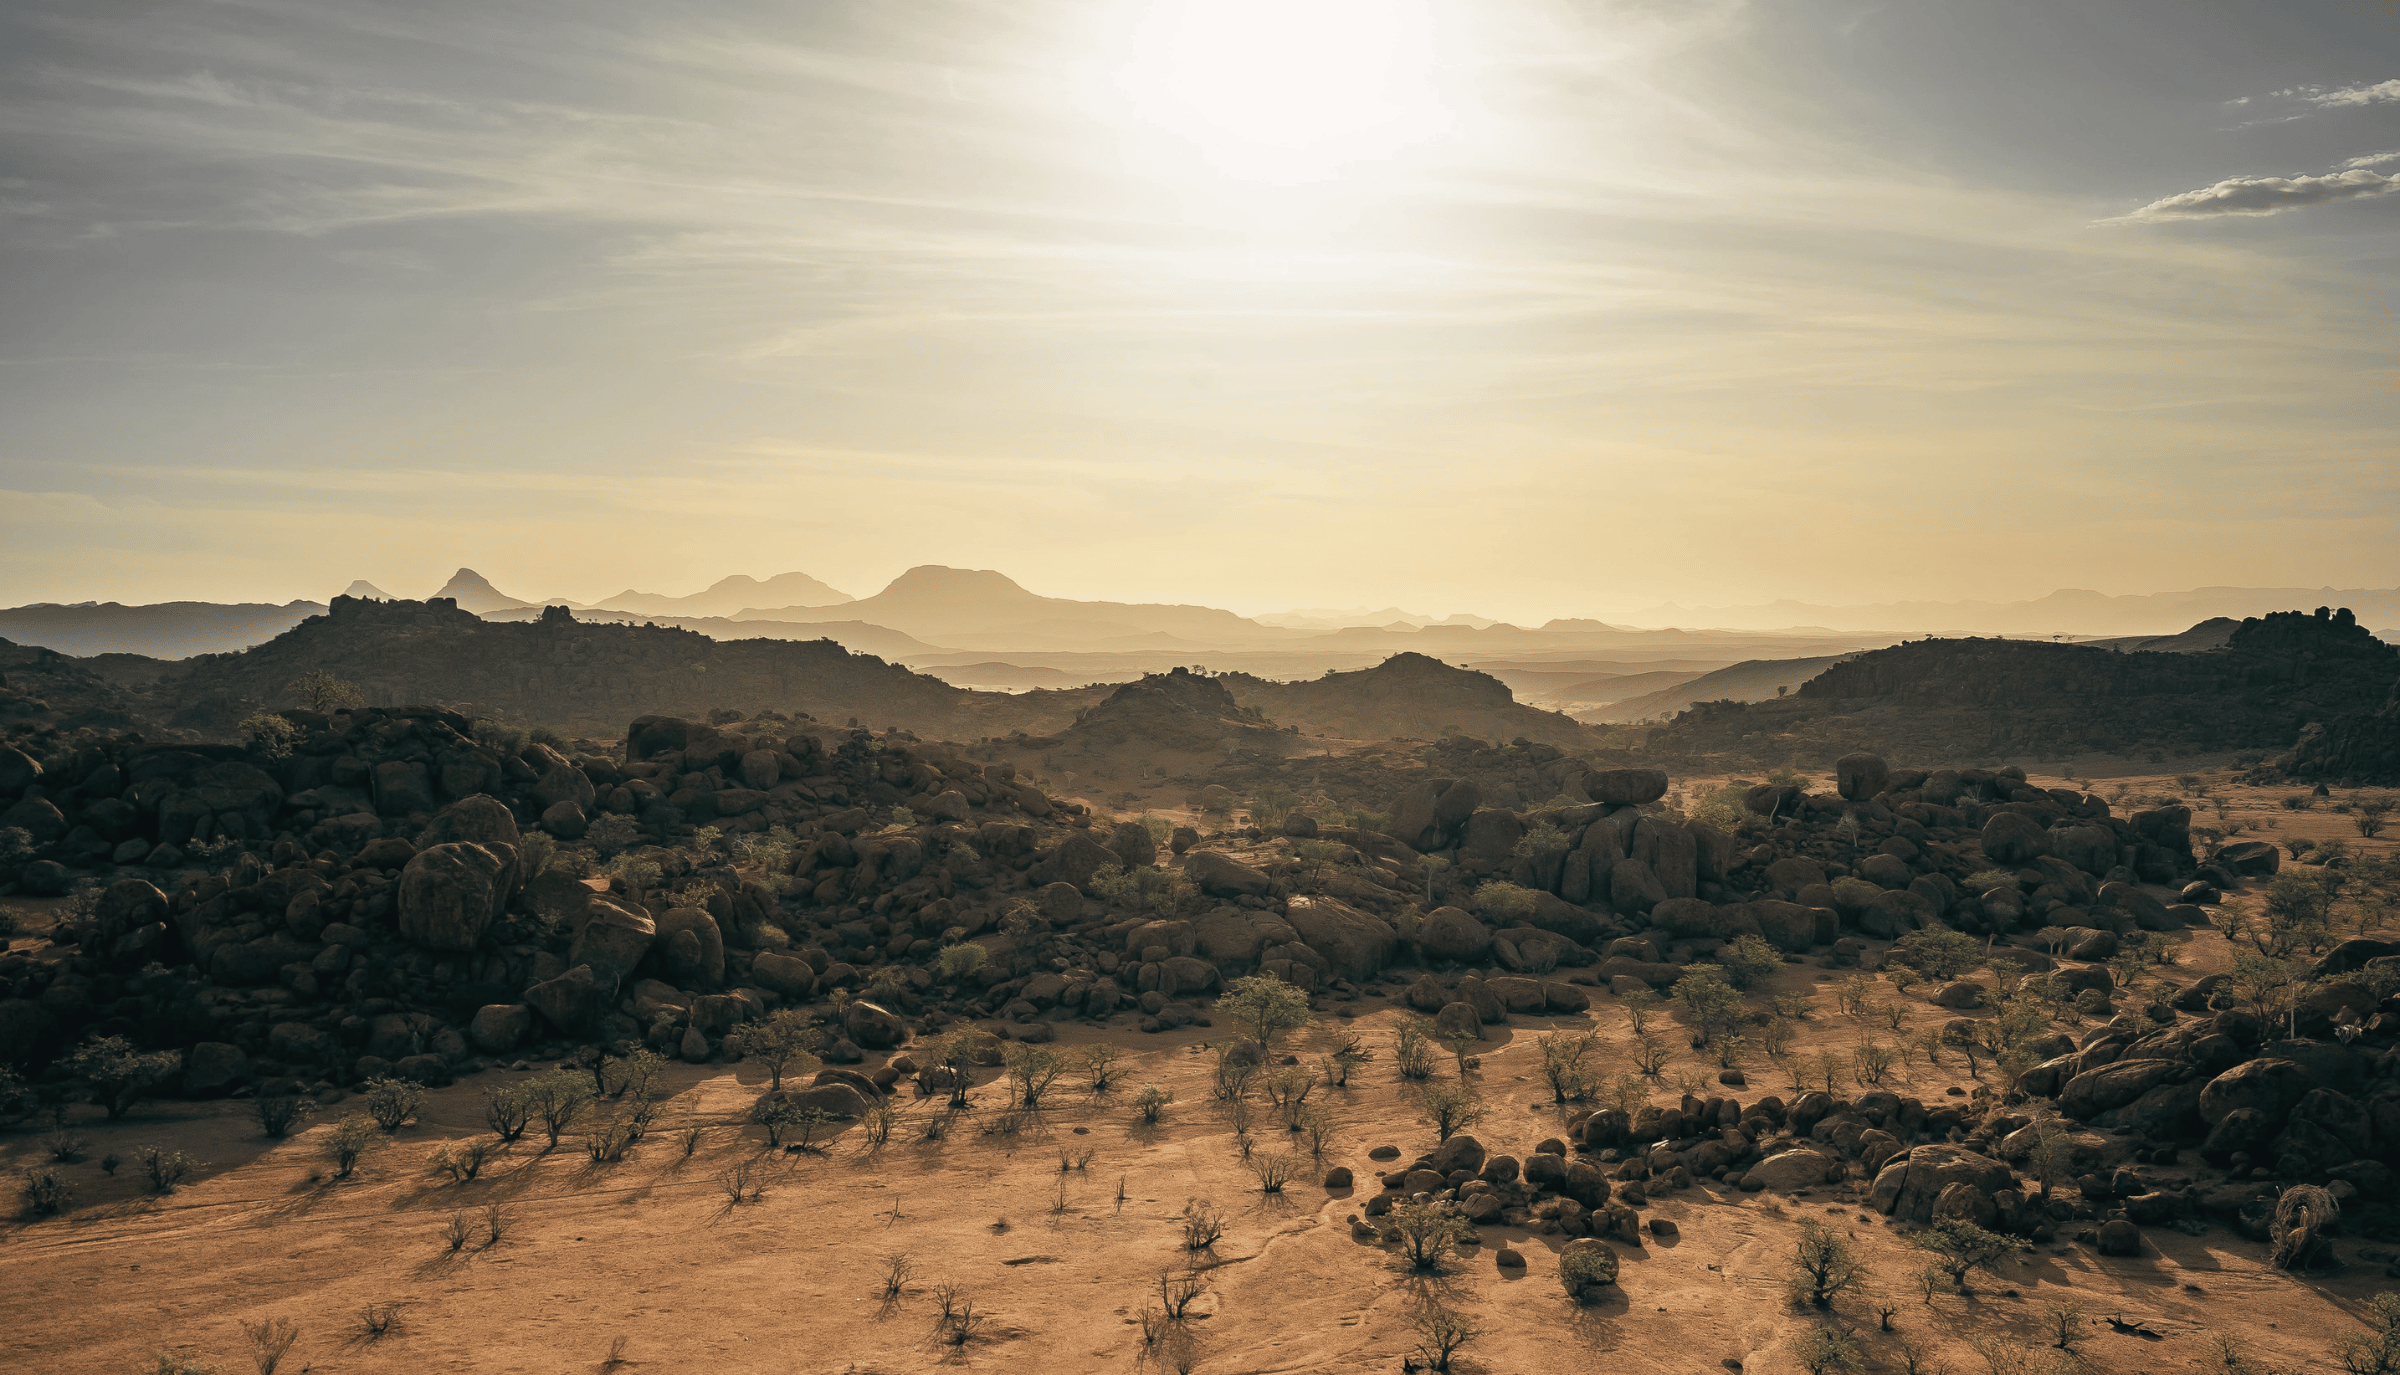 Plateau Rocheux - Namibie